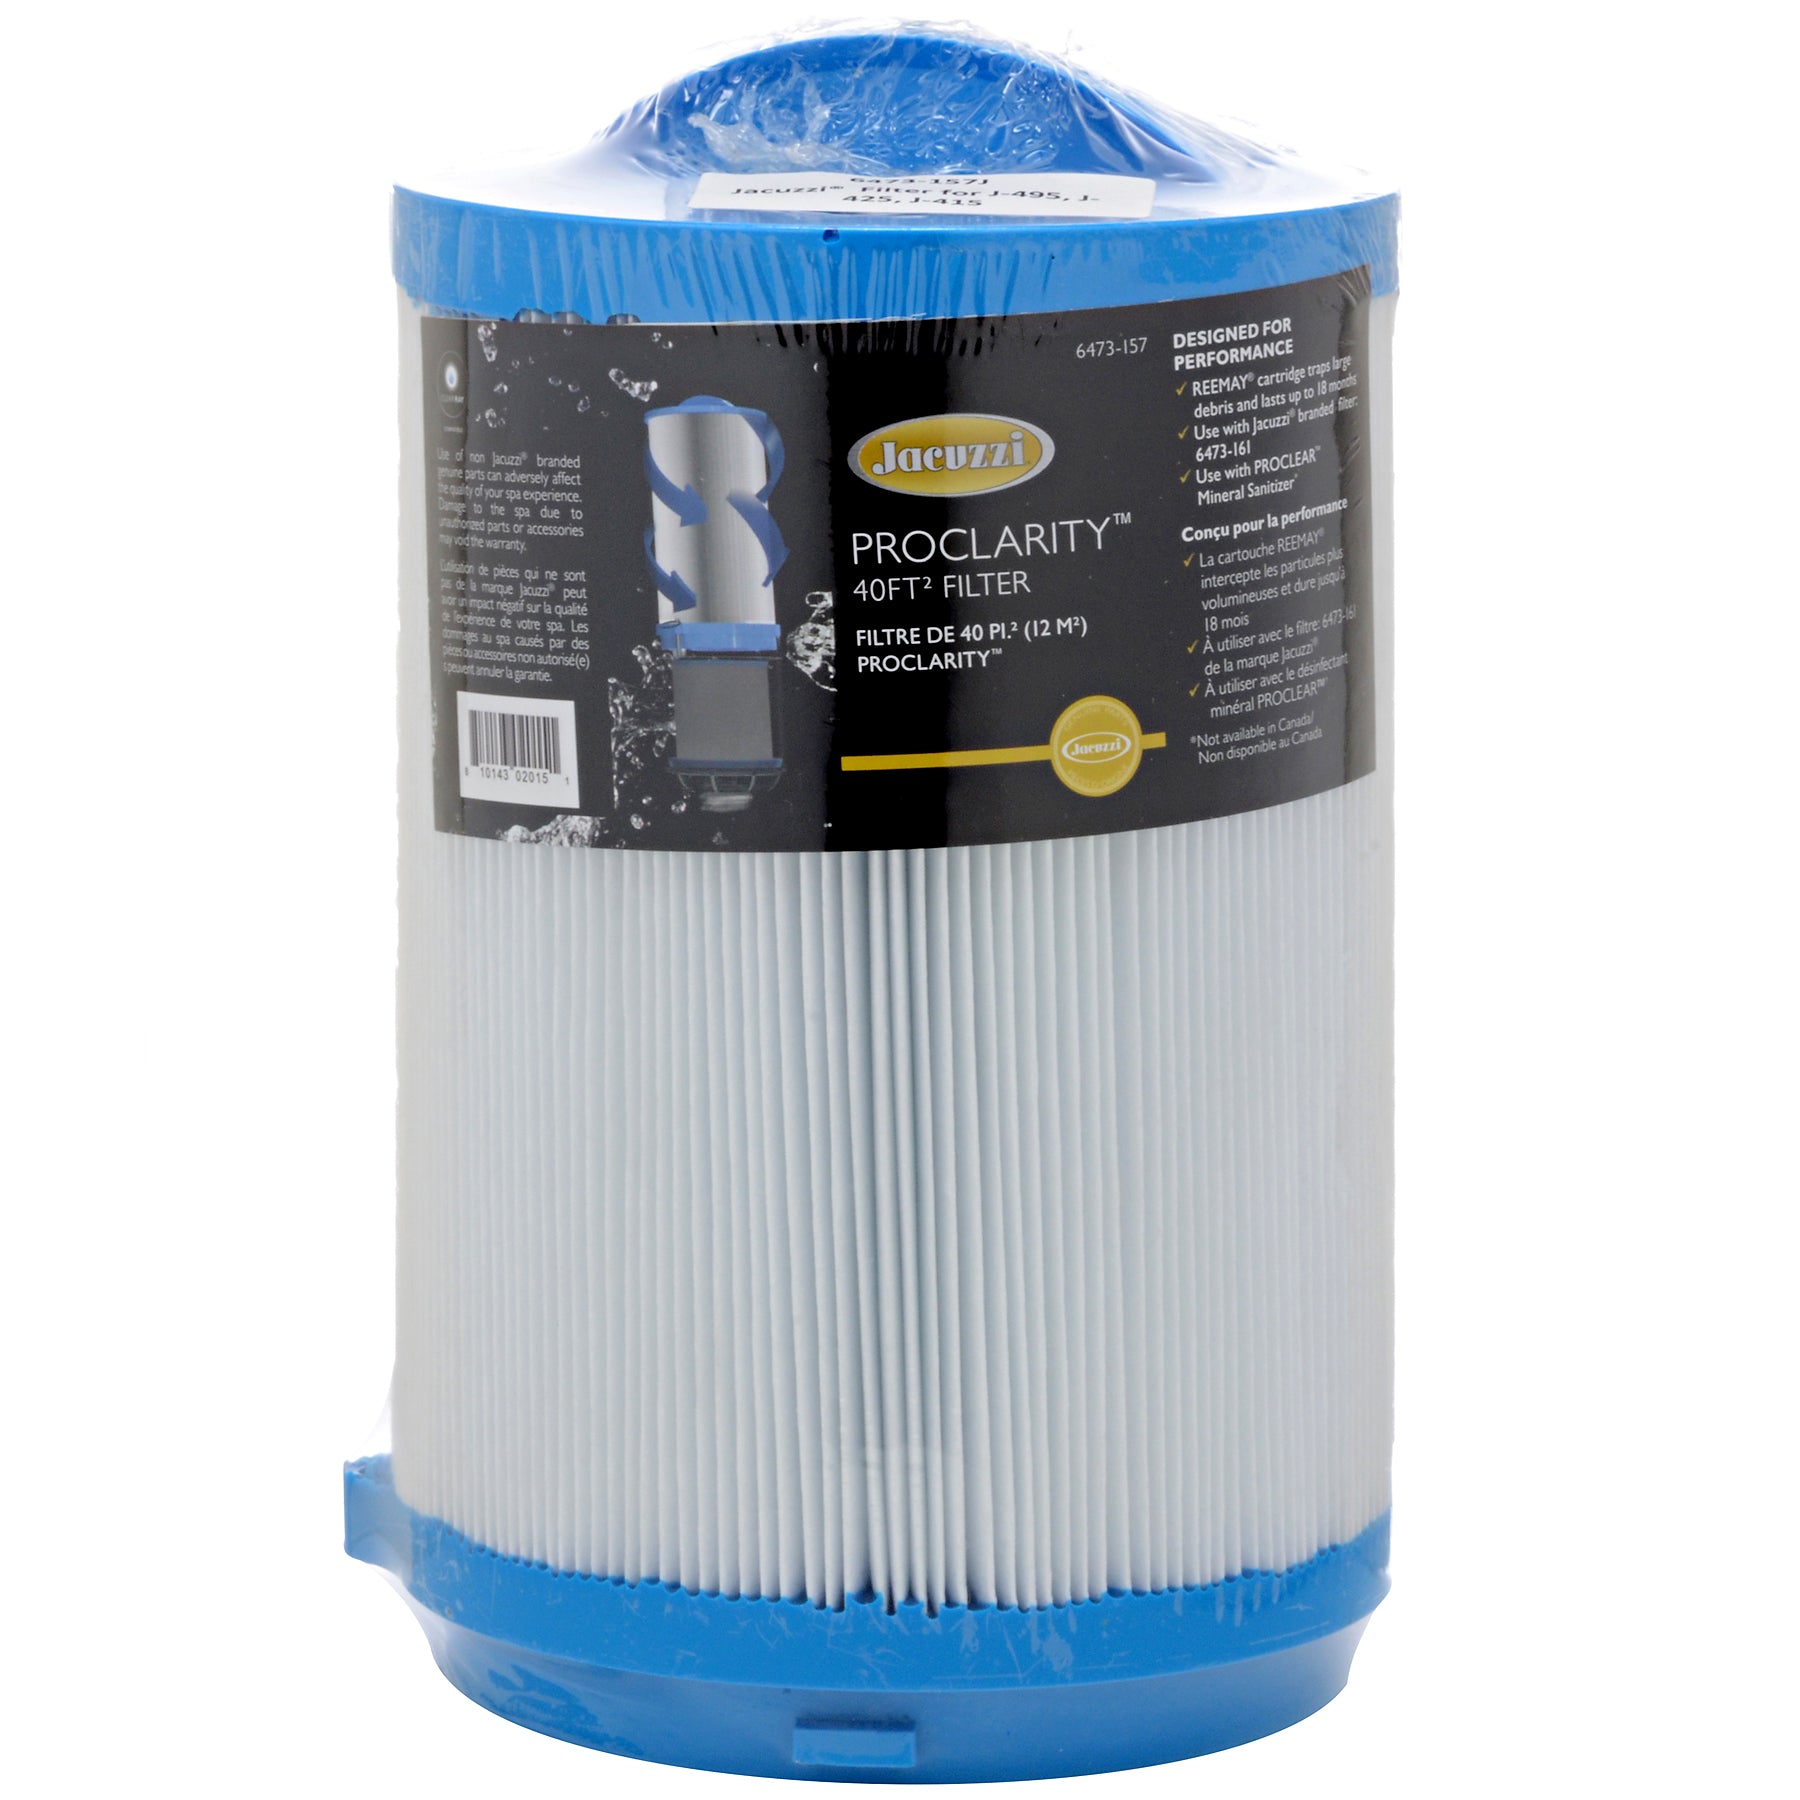 J400 filter, ProClarity, hot tub filter, 40 square foot filter, Jacuzzi filter, 6473-157J